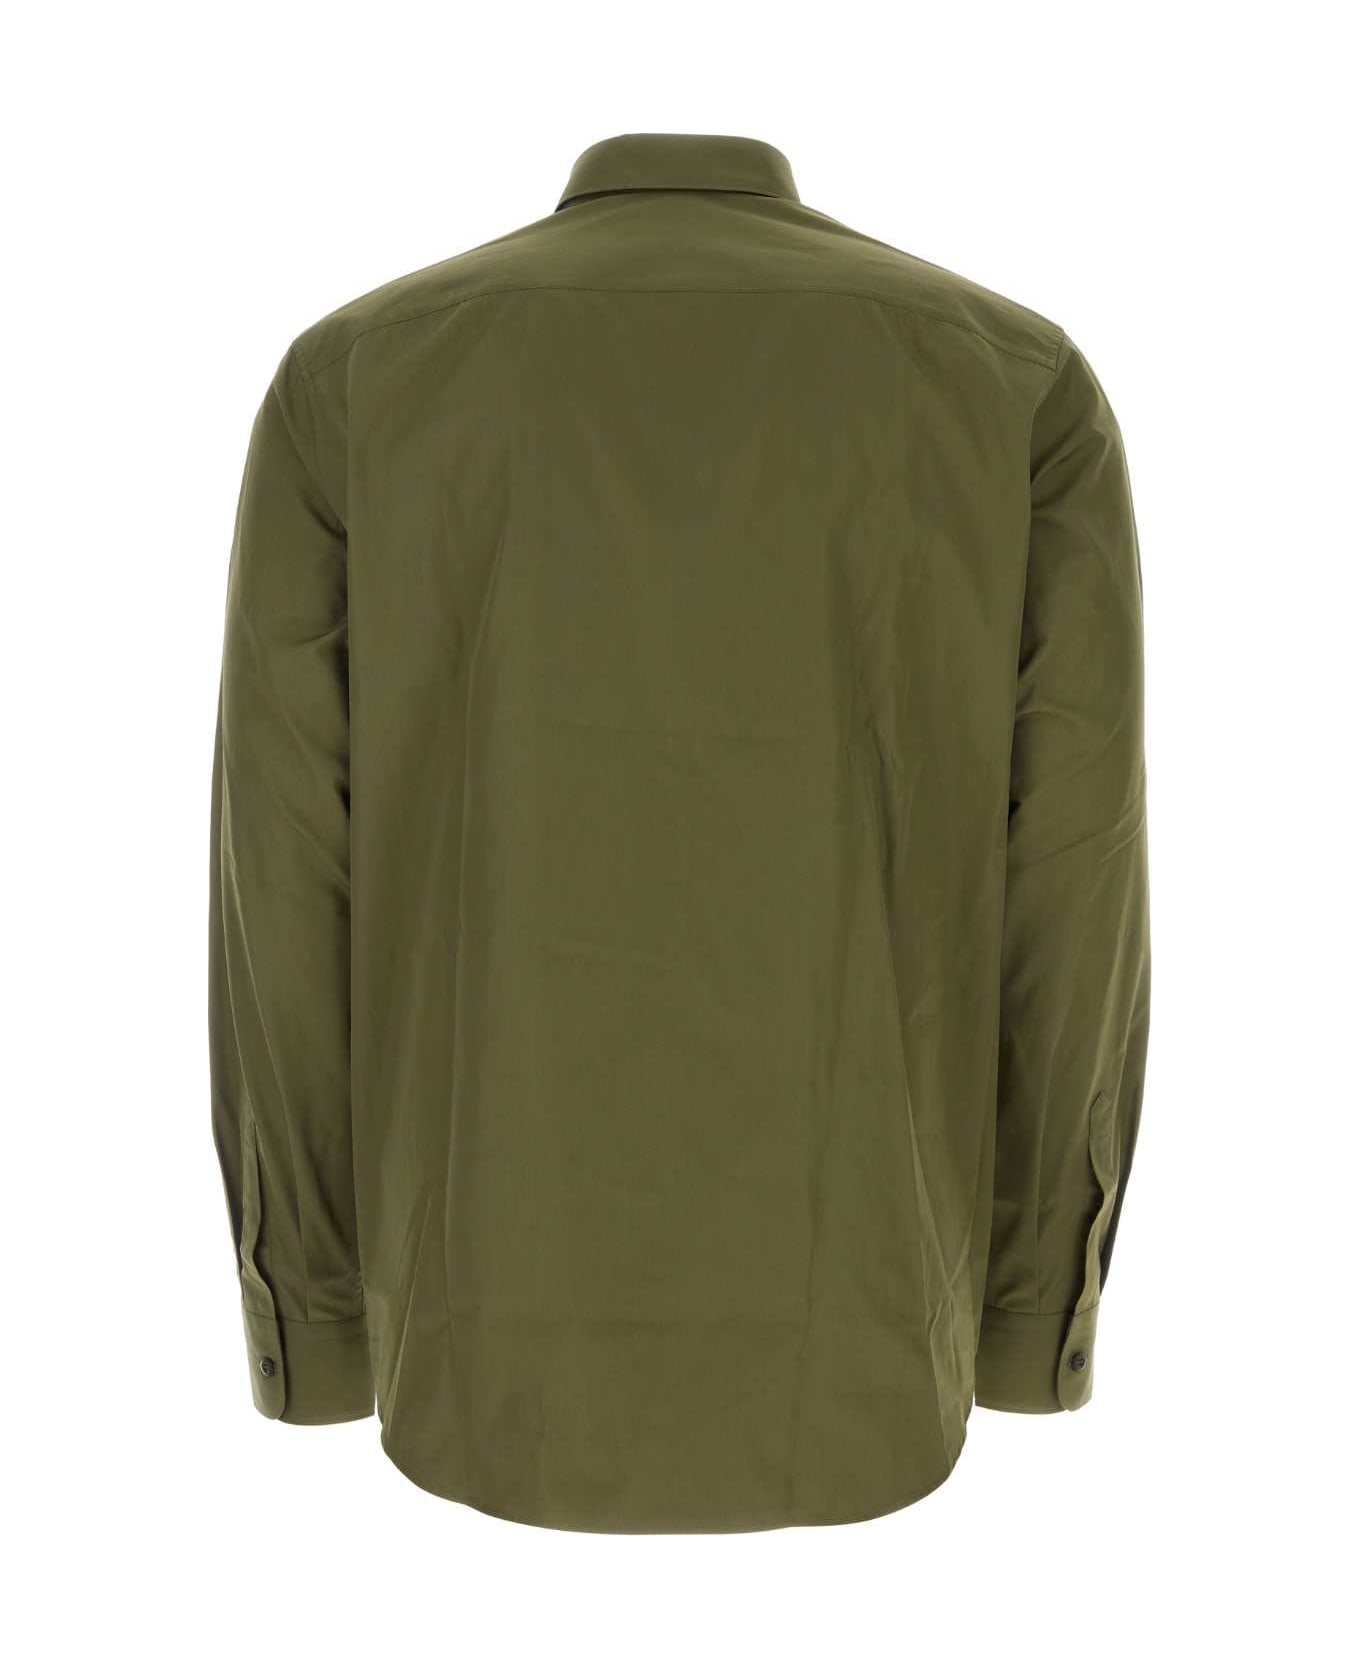 Prada Army Green Poplin Shirt - MILITARE